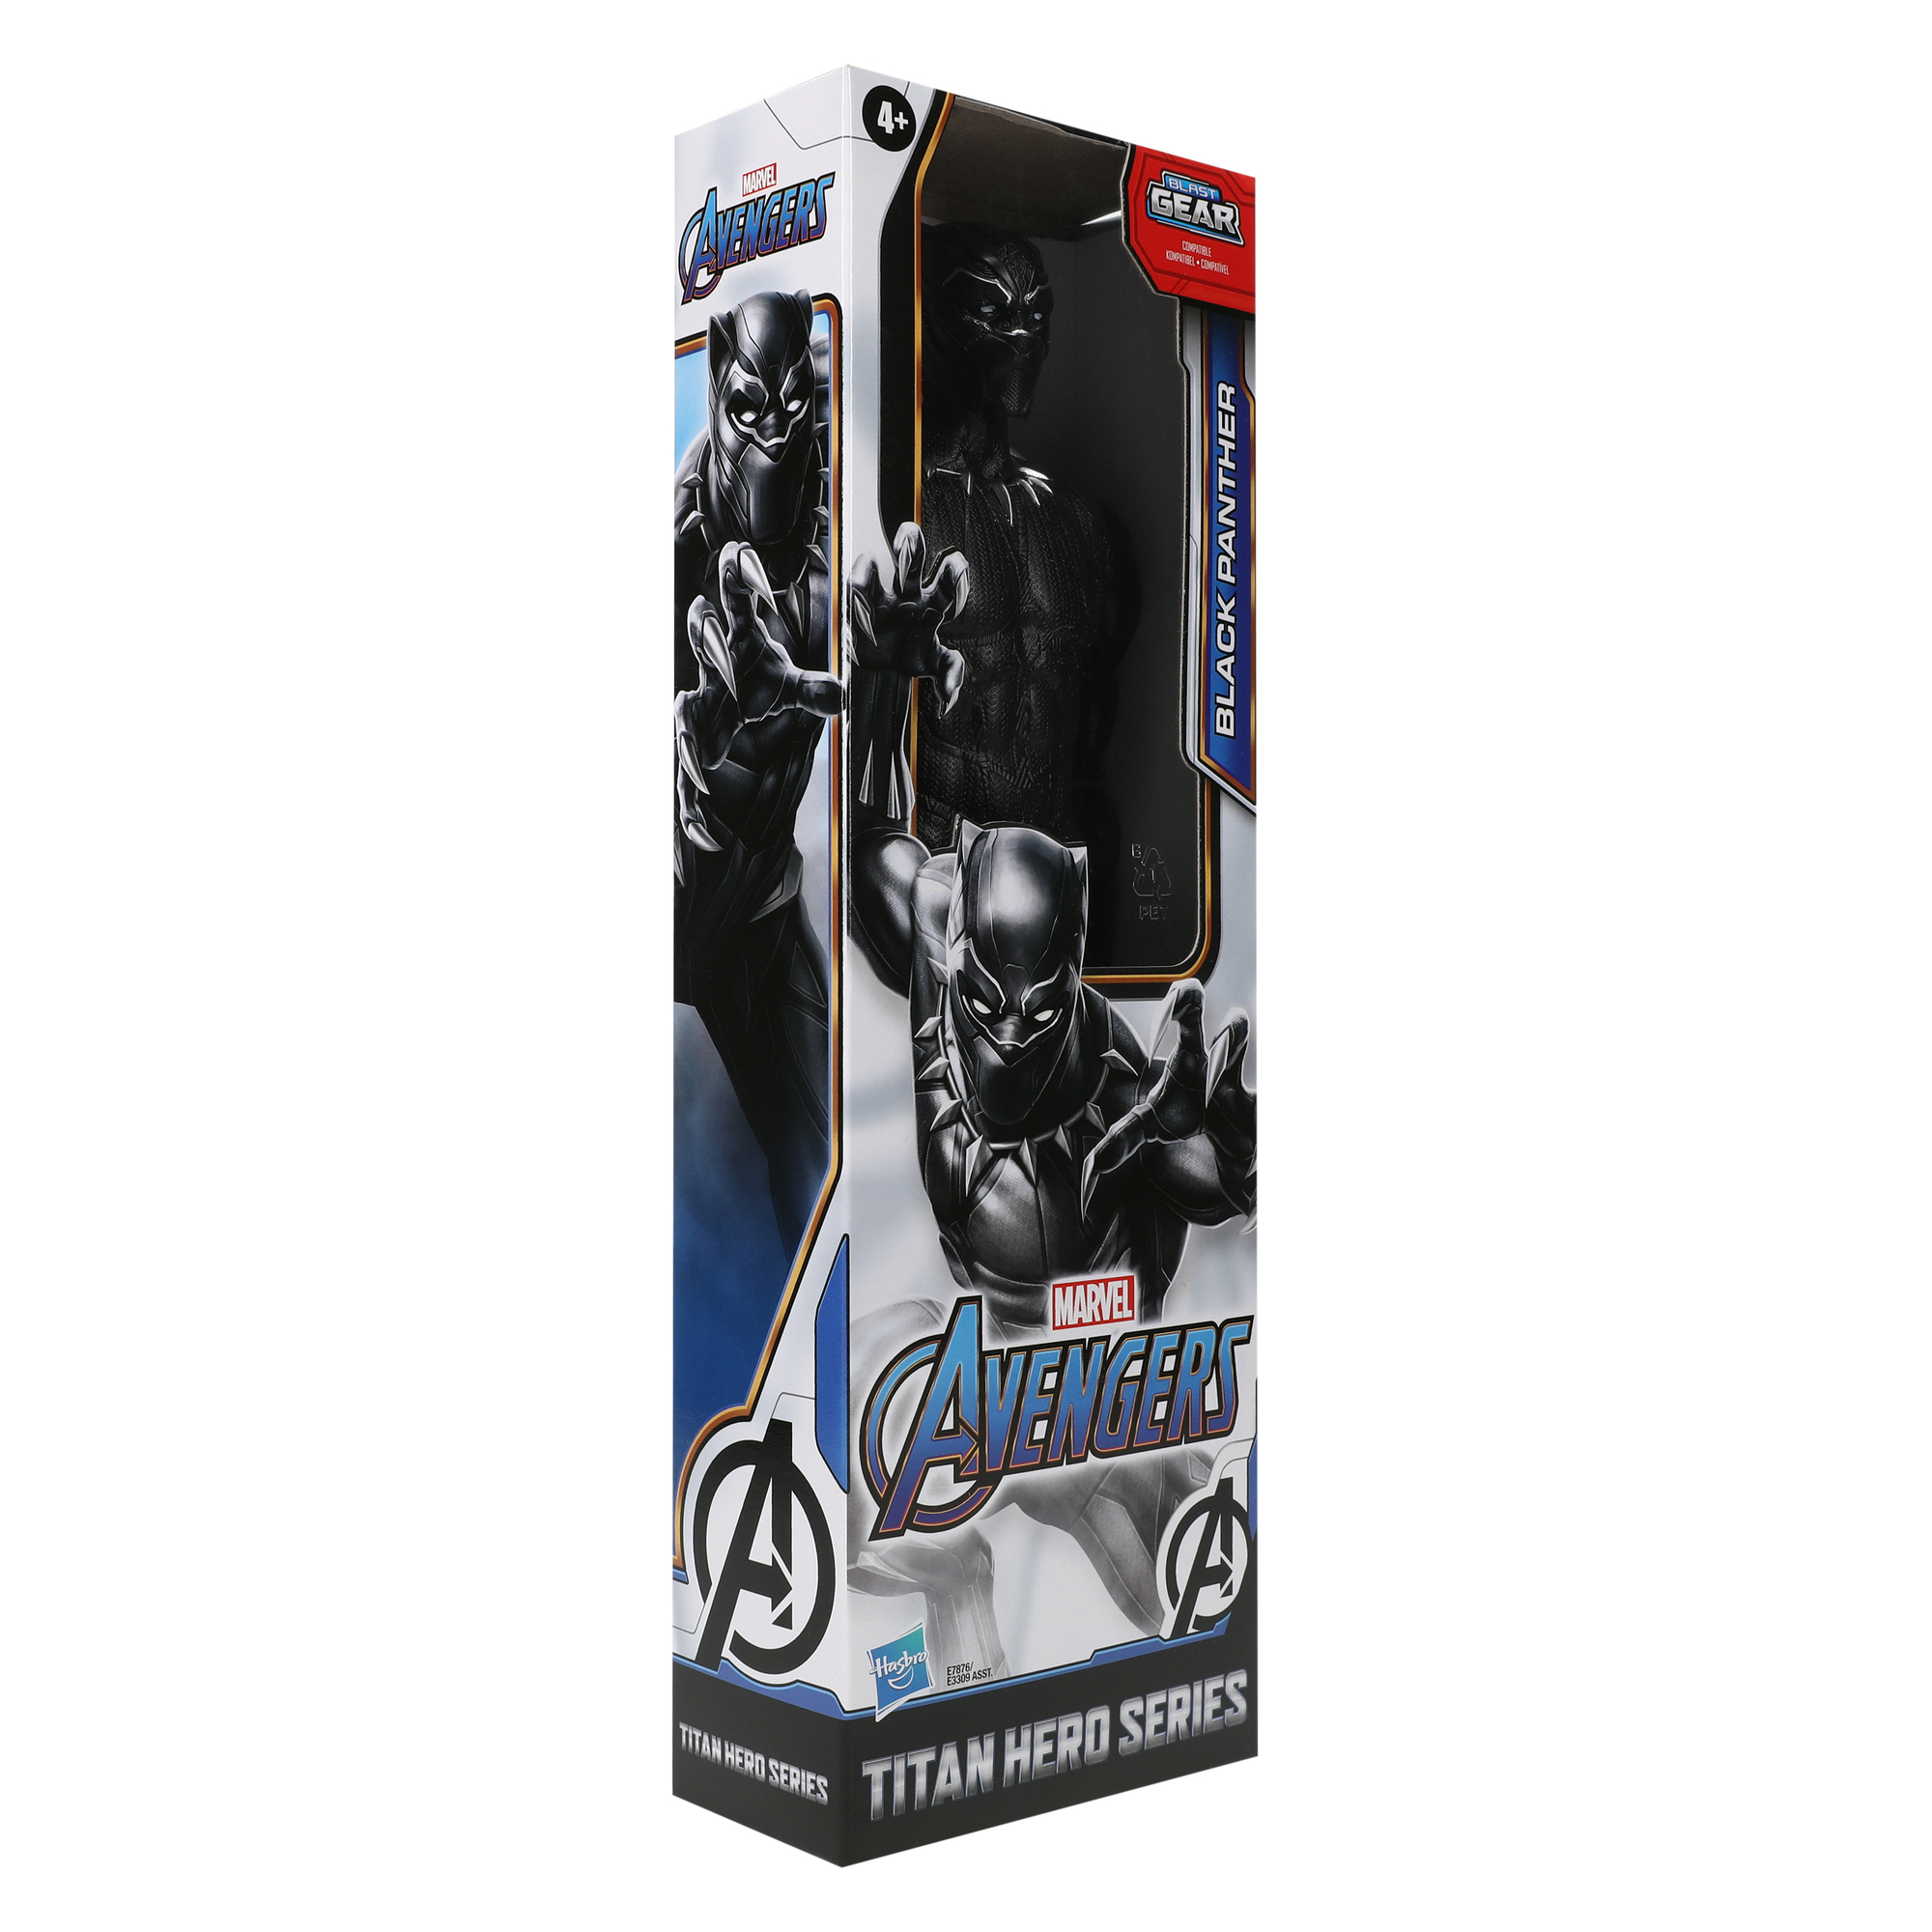 Marvel Avengers Black Panther titan hero series figure 12in